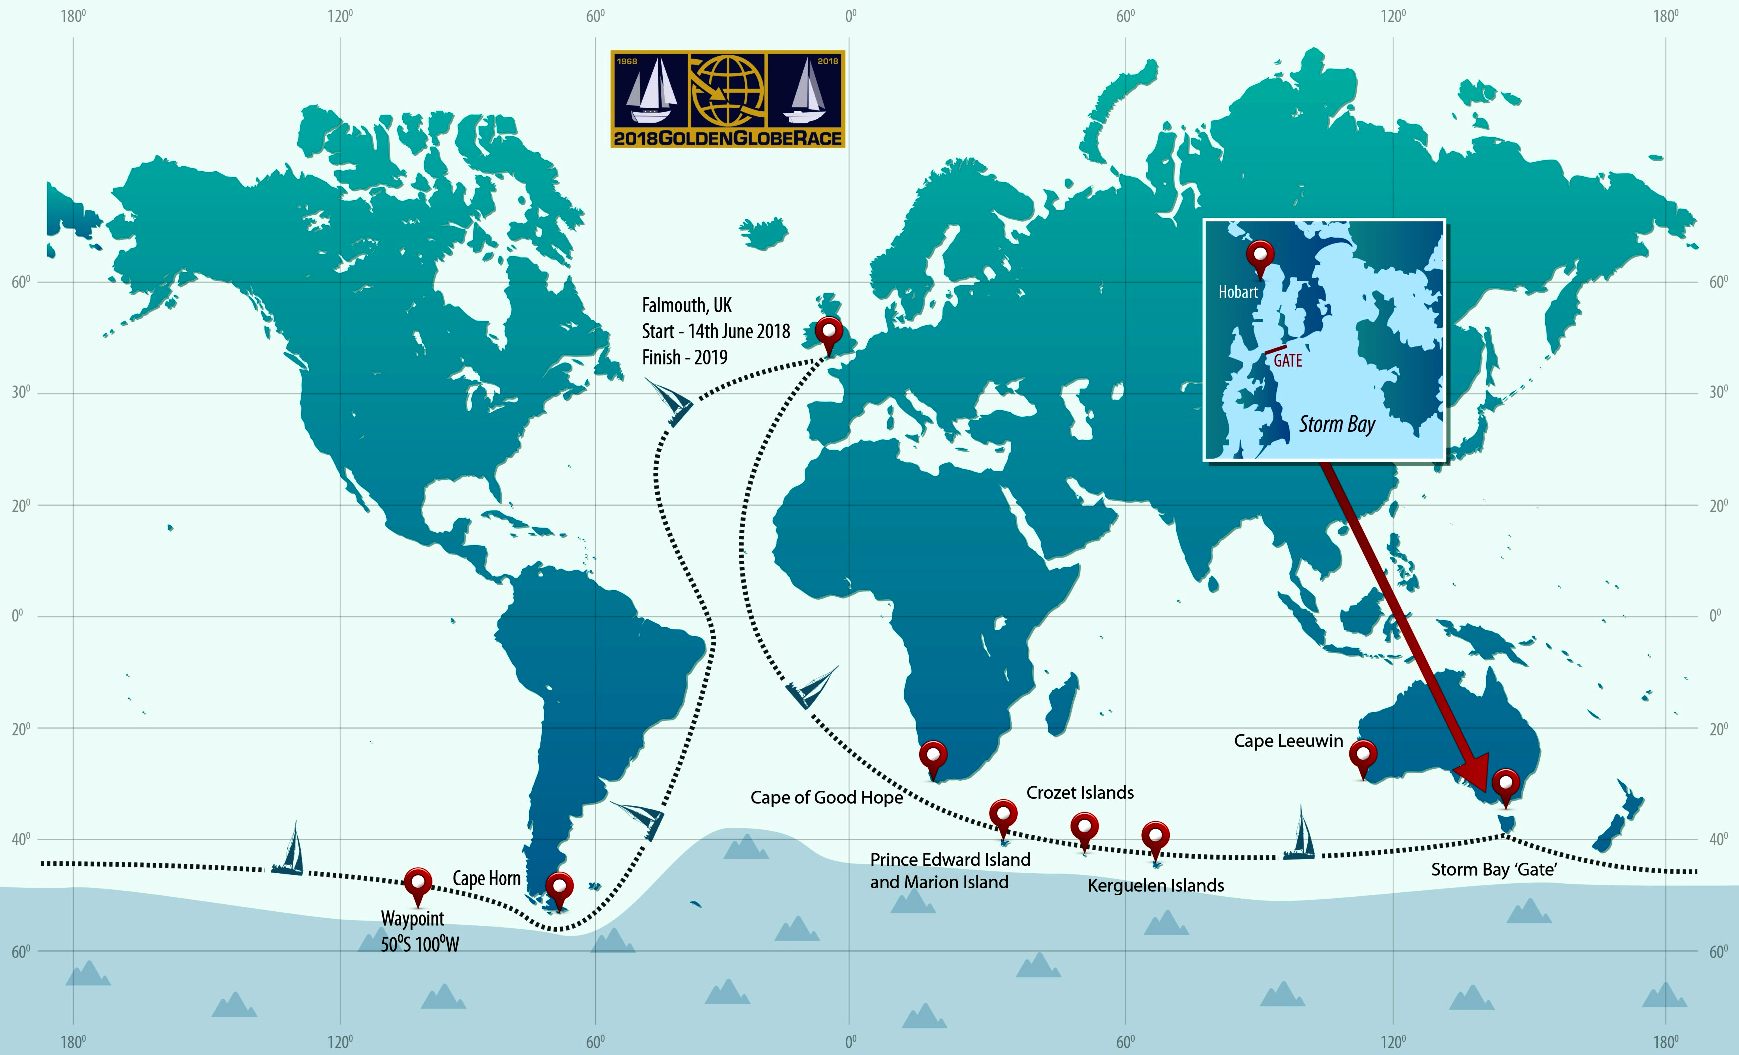 Golden Globe world circumnavigation sailing race route